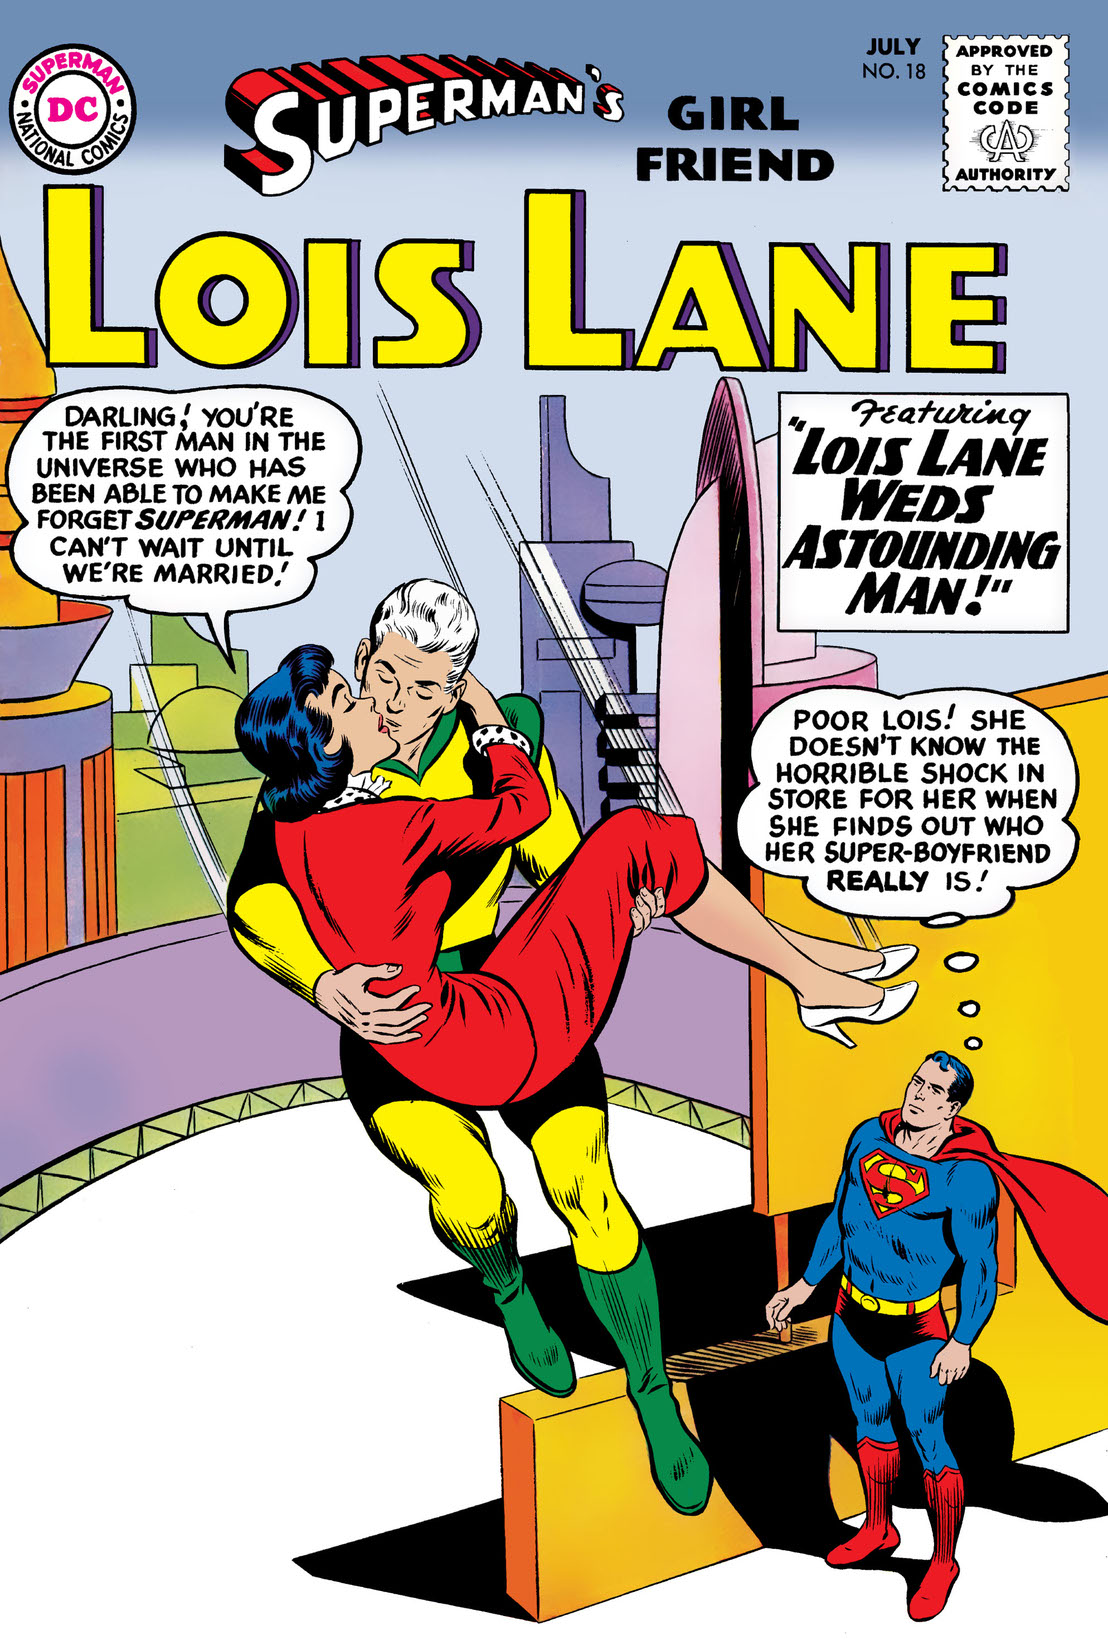 Superman's Girl Friend Lois Lane #18 preview images